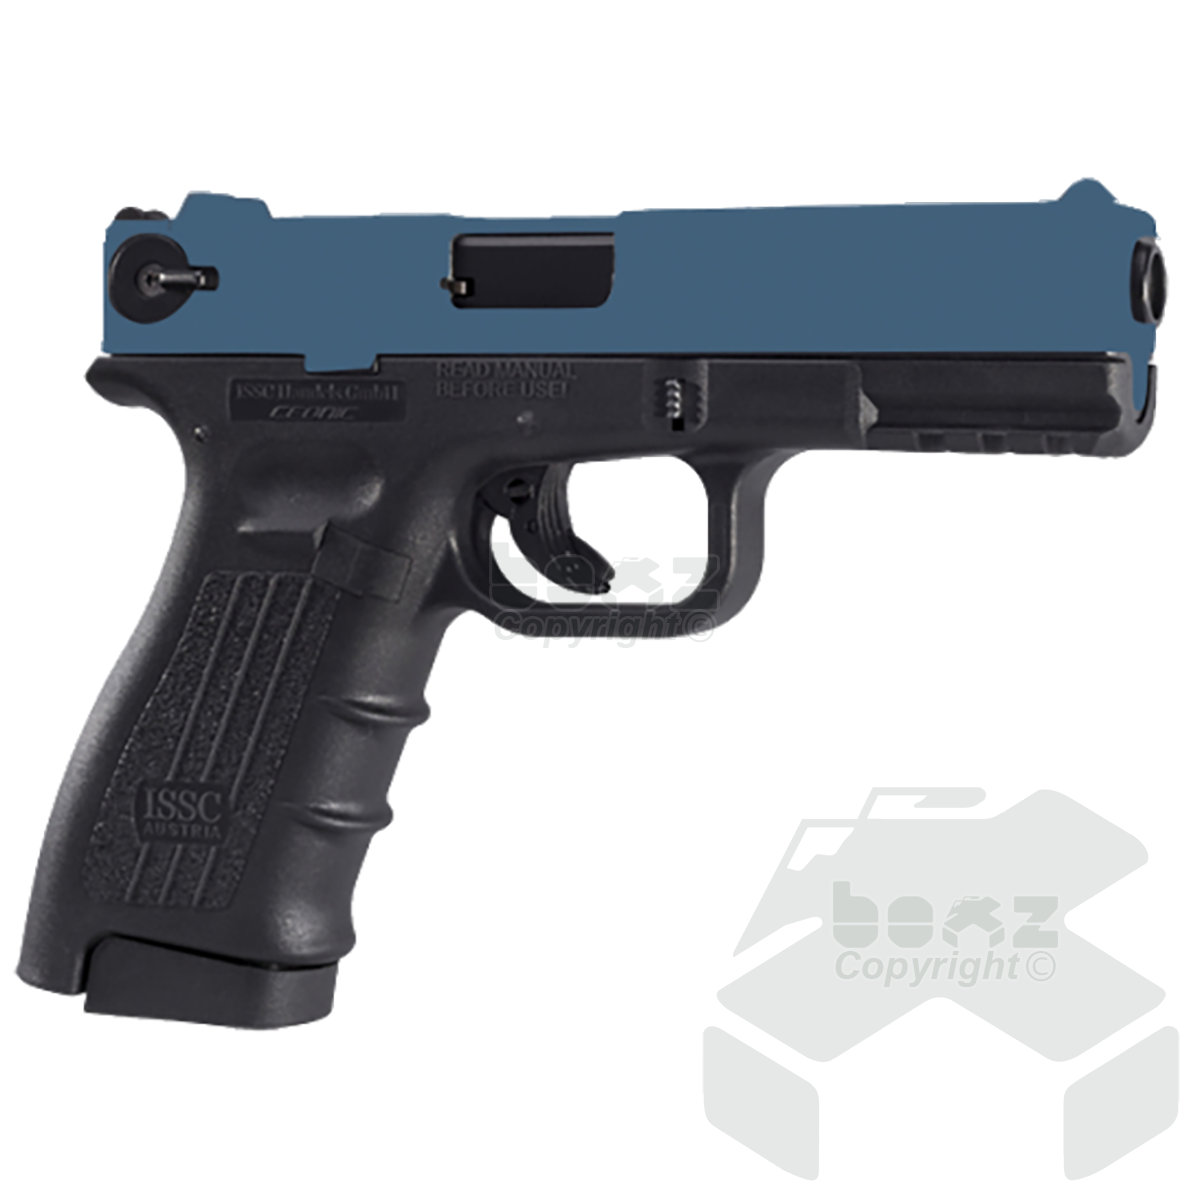 Ceonic M22 Blank Firing Pistol - 9mm - Blue Black